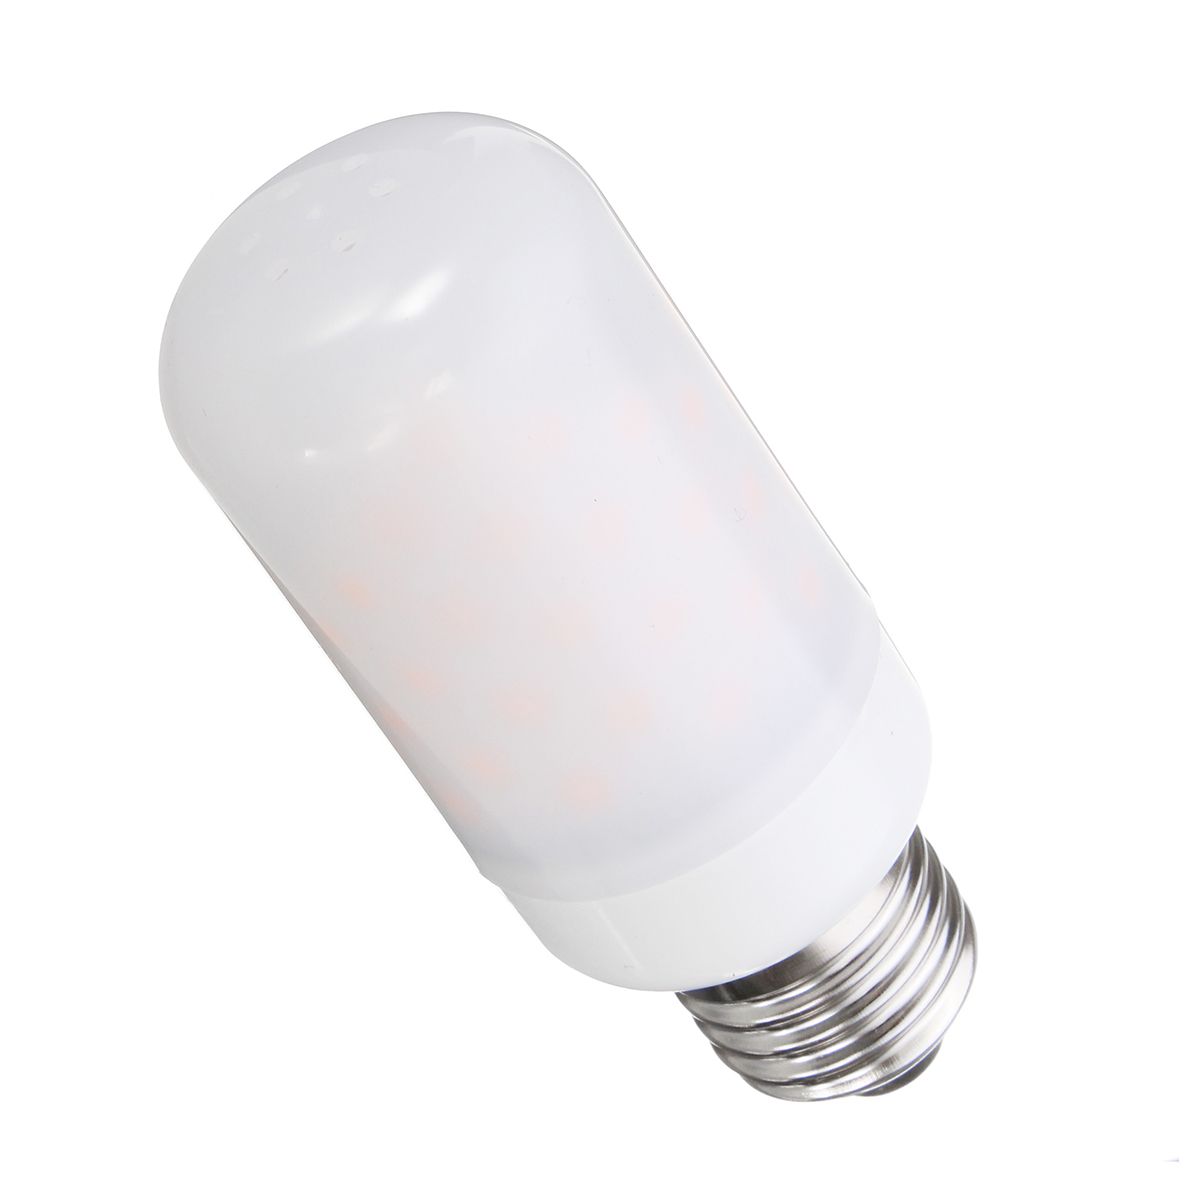 E27-E14-27W-Two-Modes-LED-Flame-Effect-Simulated-Corn-Light-Bulb-Nature-Fire-Home-Lamp-AC85-265V-1637673